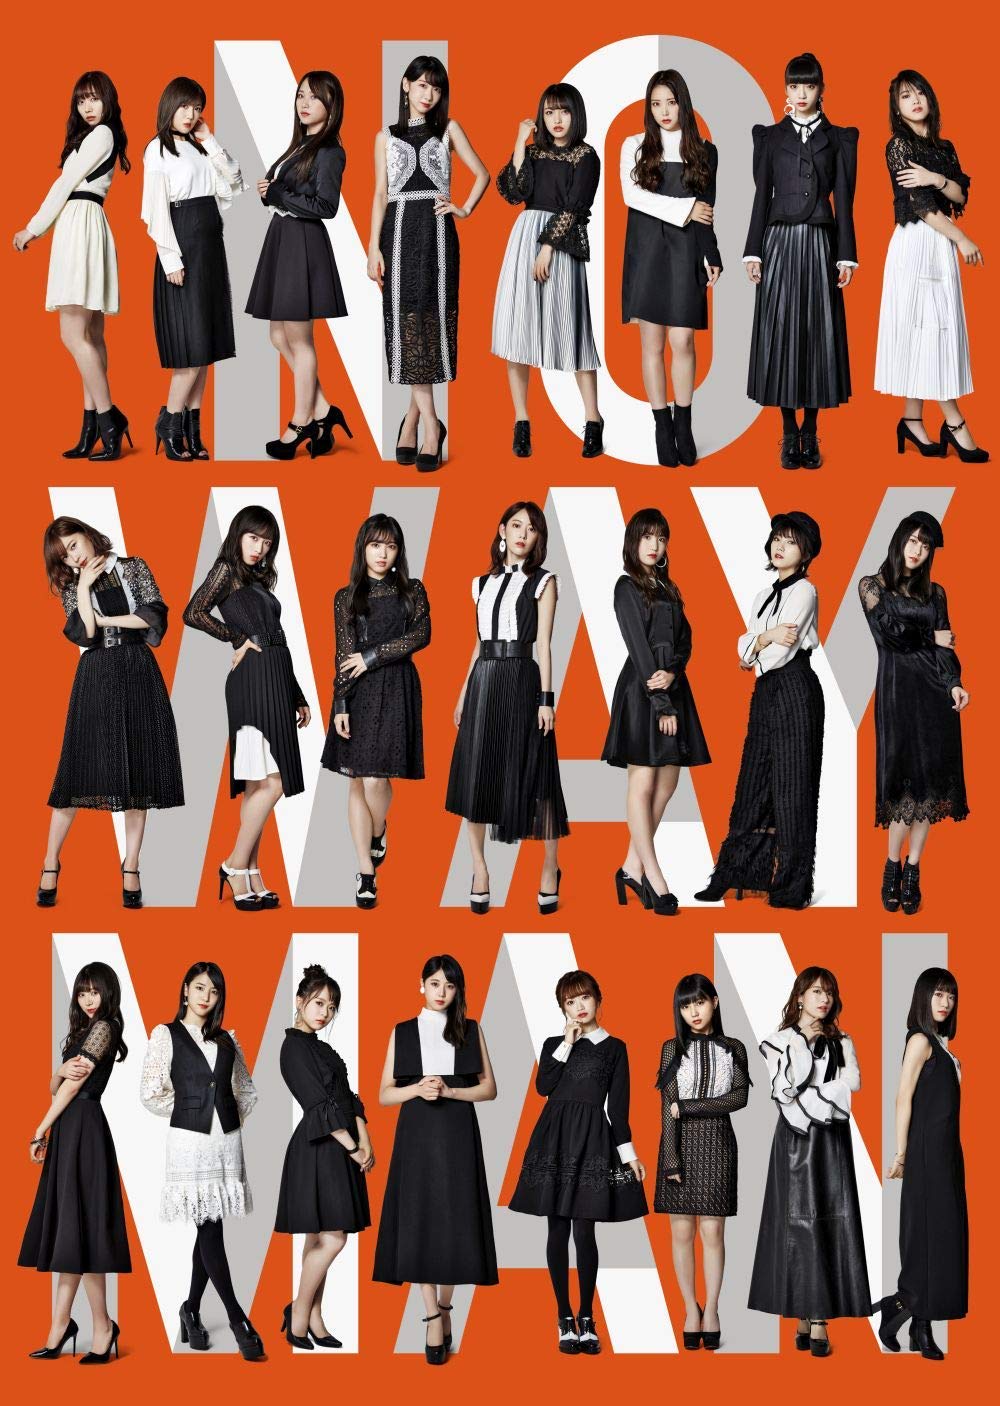 AKB48/54thシングル「NO WAY MAN｣（CD+DVD）Type-E【初回限定盤】（ラムタラ特典